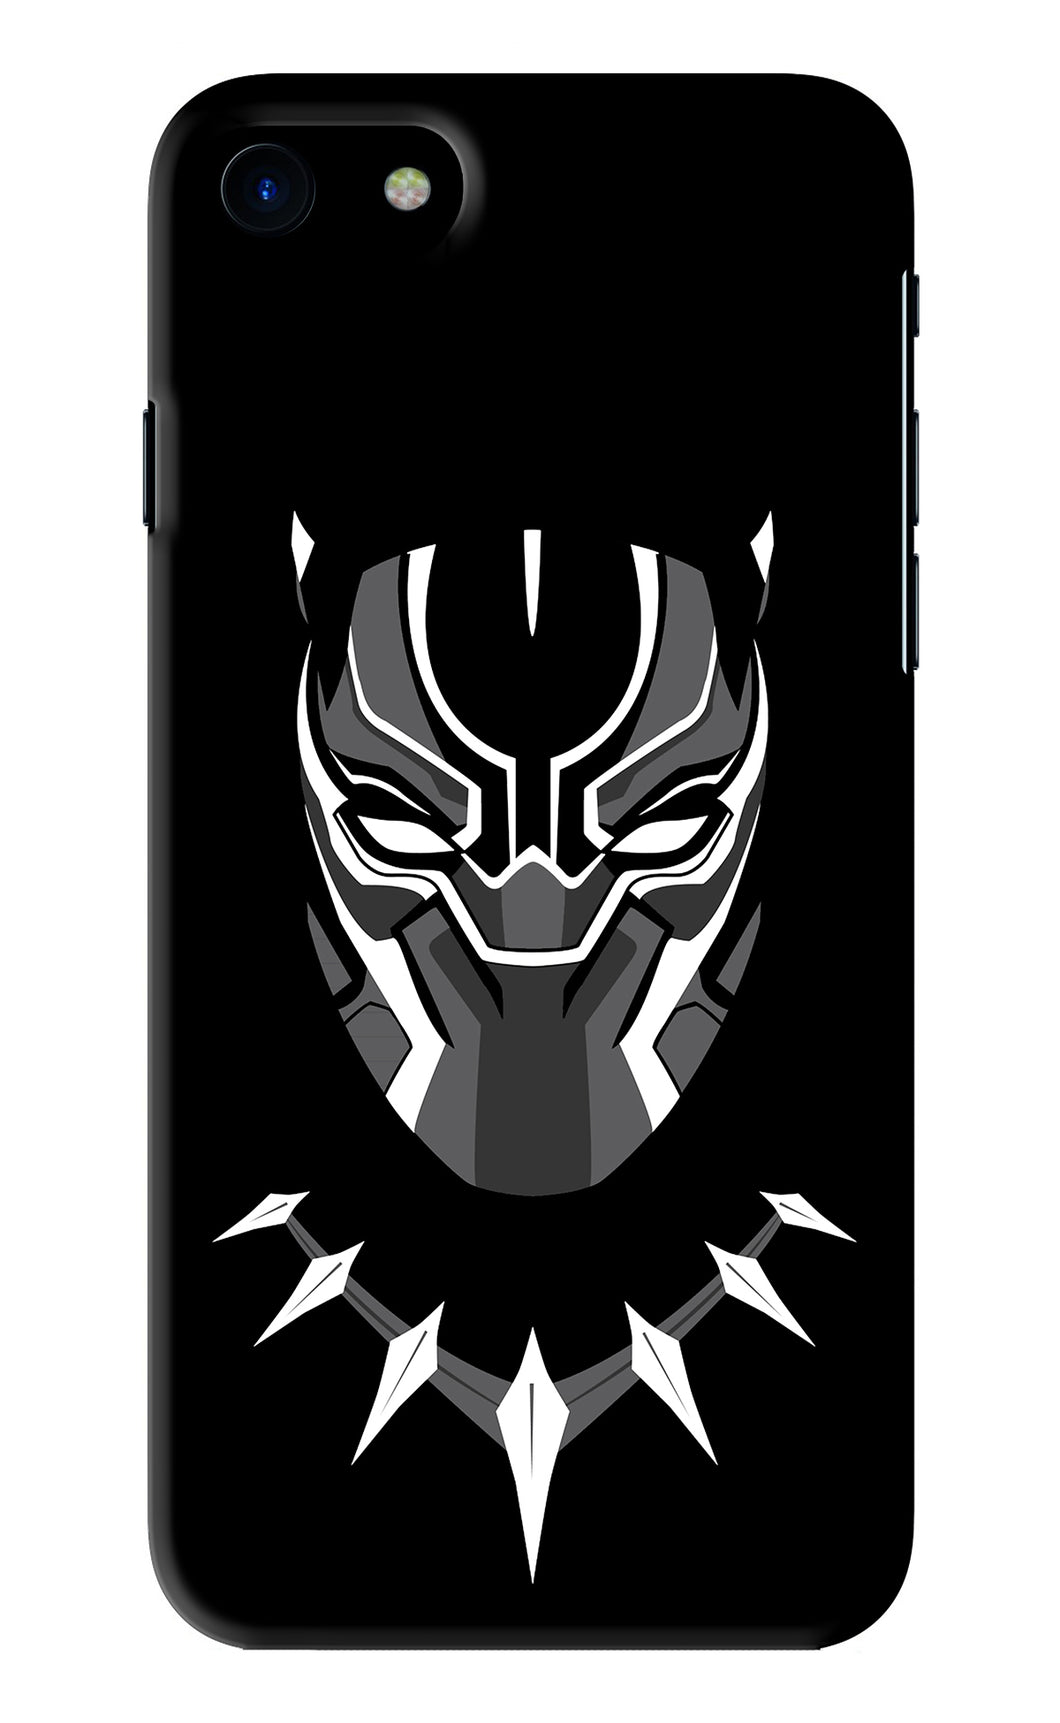 Black Panther iPhone SE 2020 Back Skin Wrap